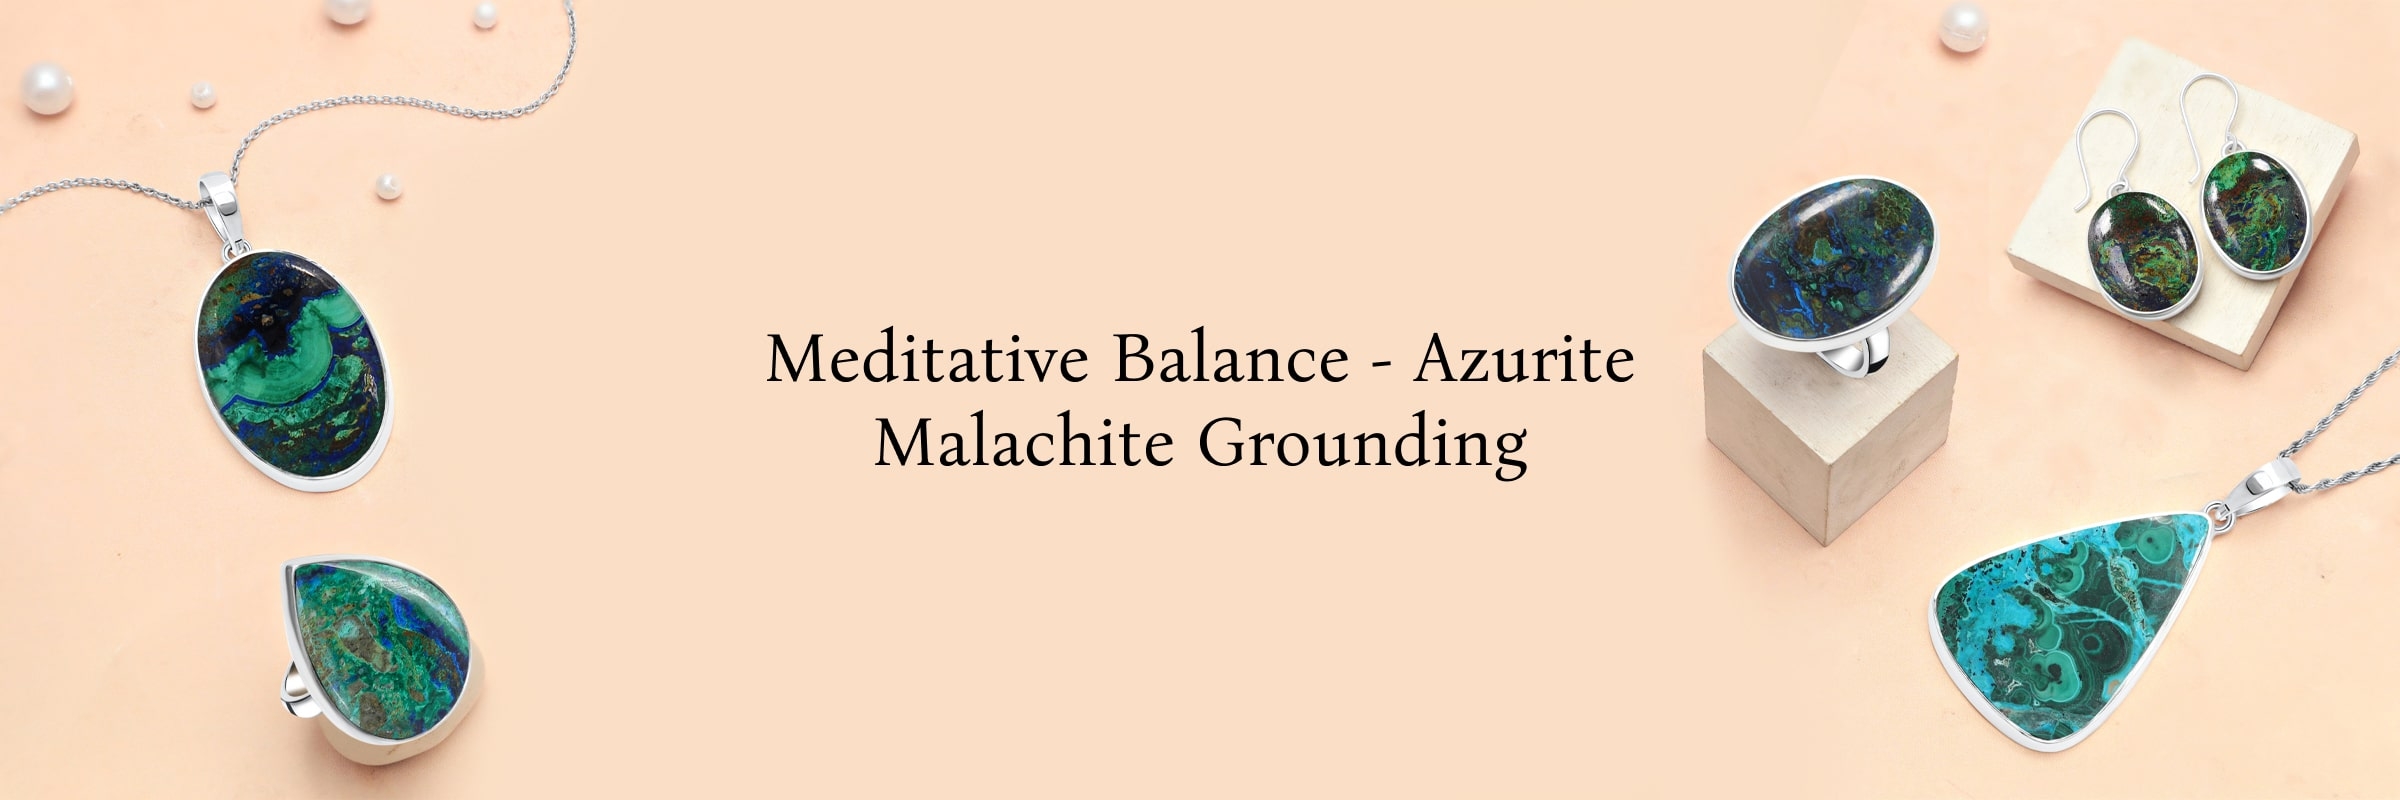 Azurite Malachite Meditation and Grounding